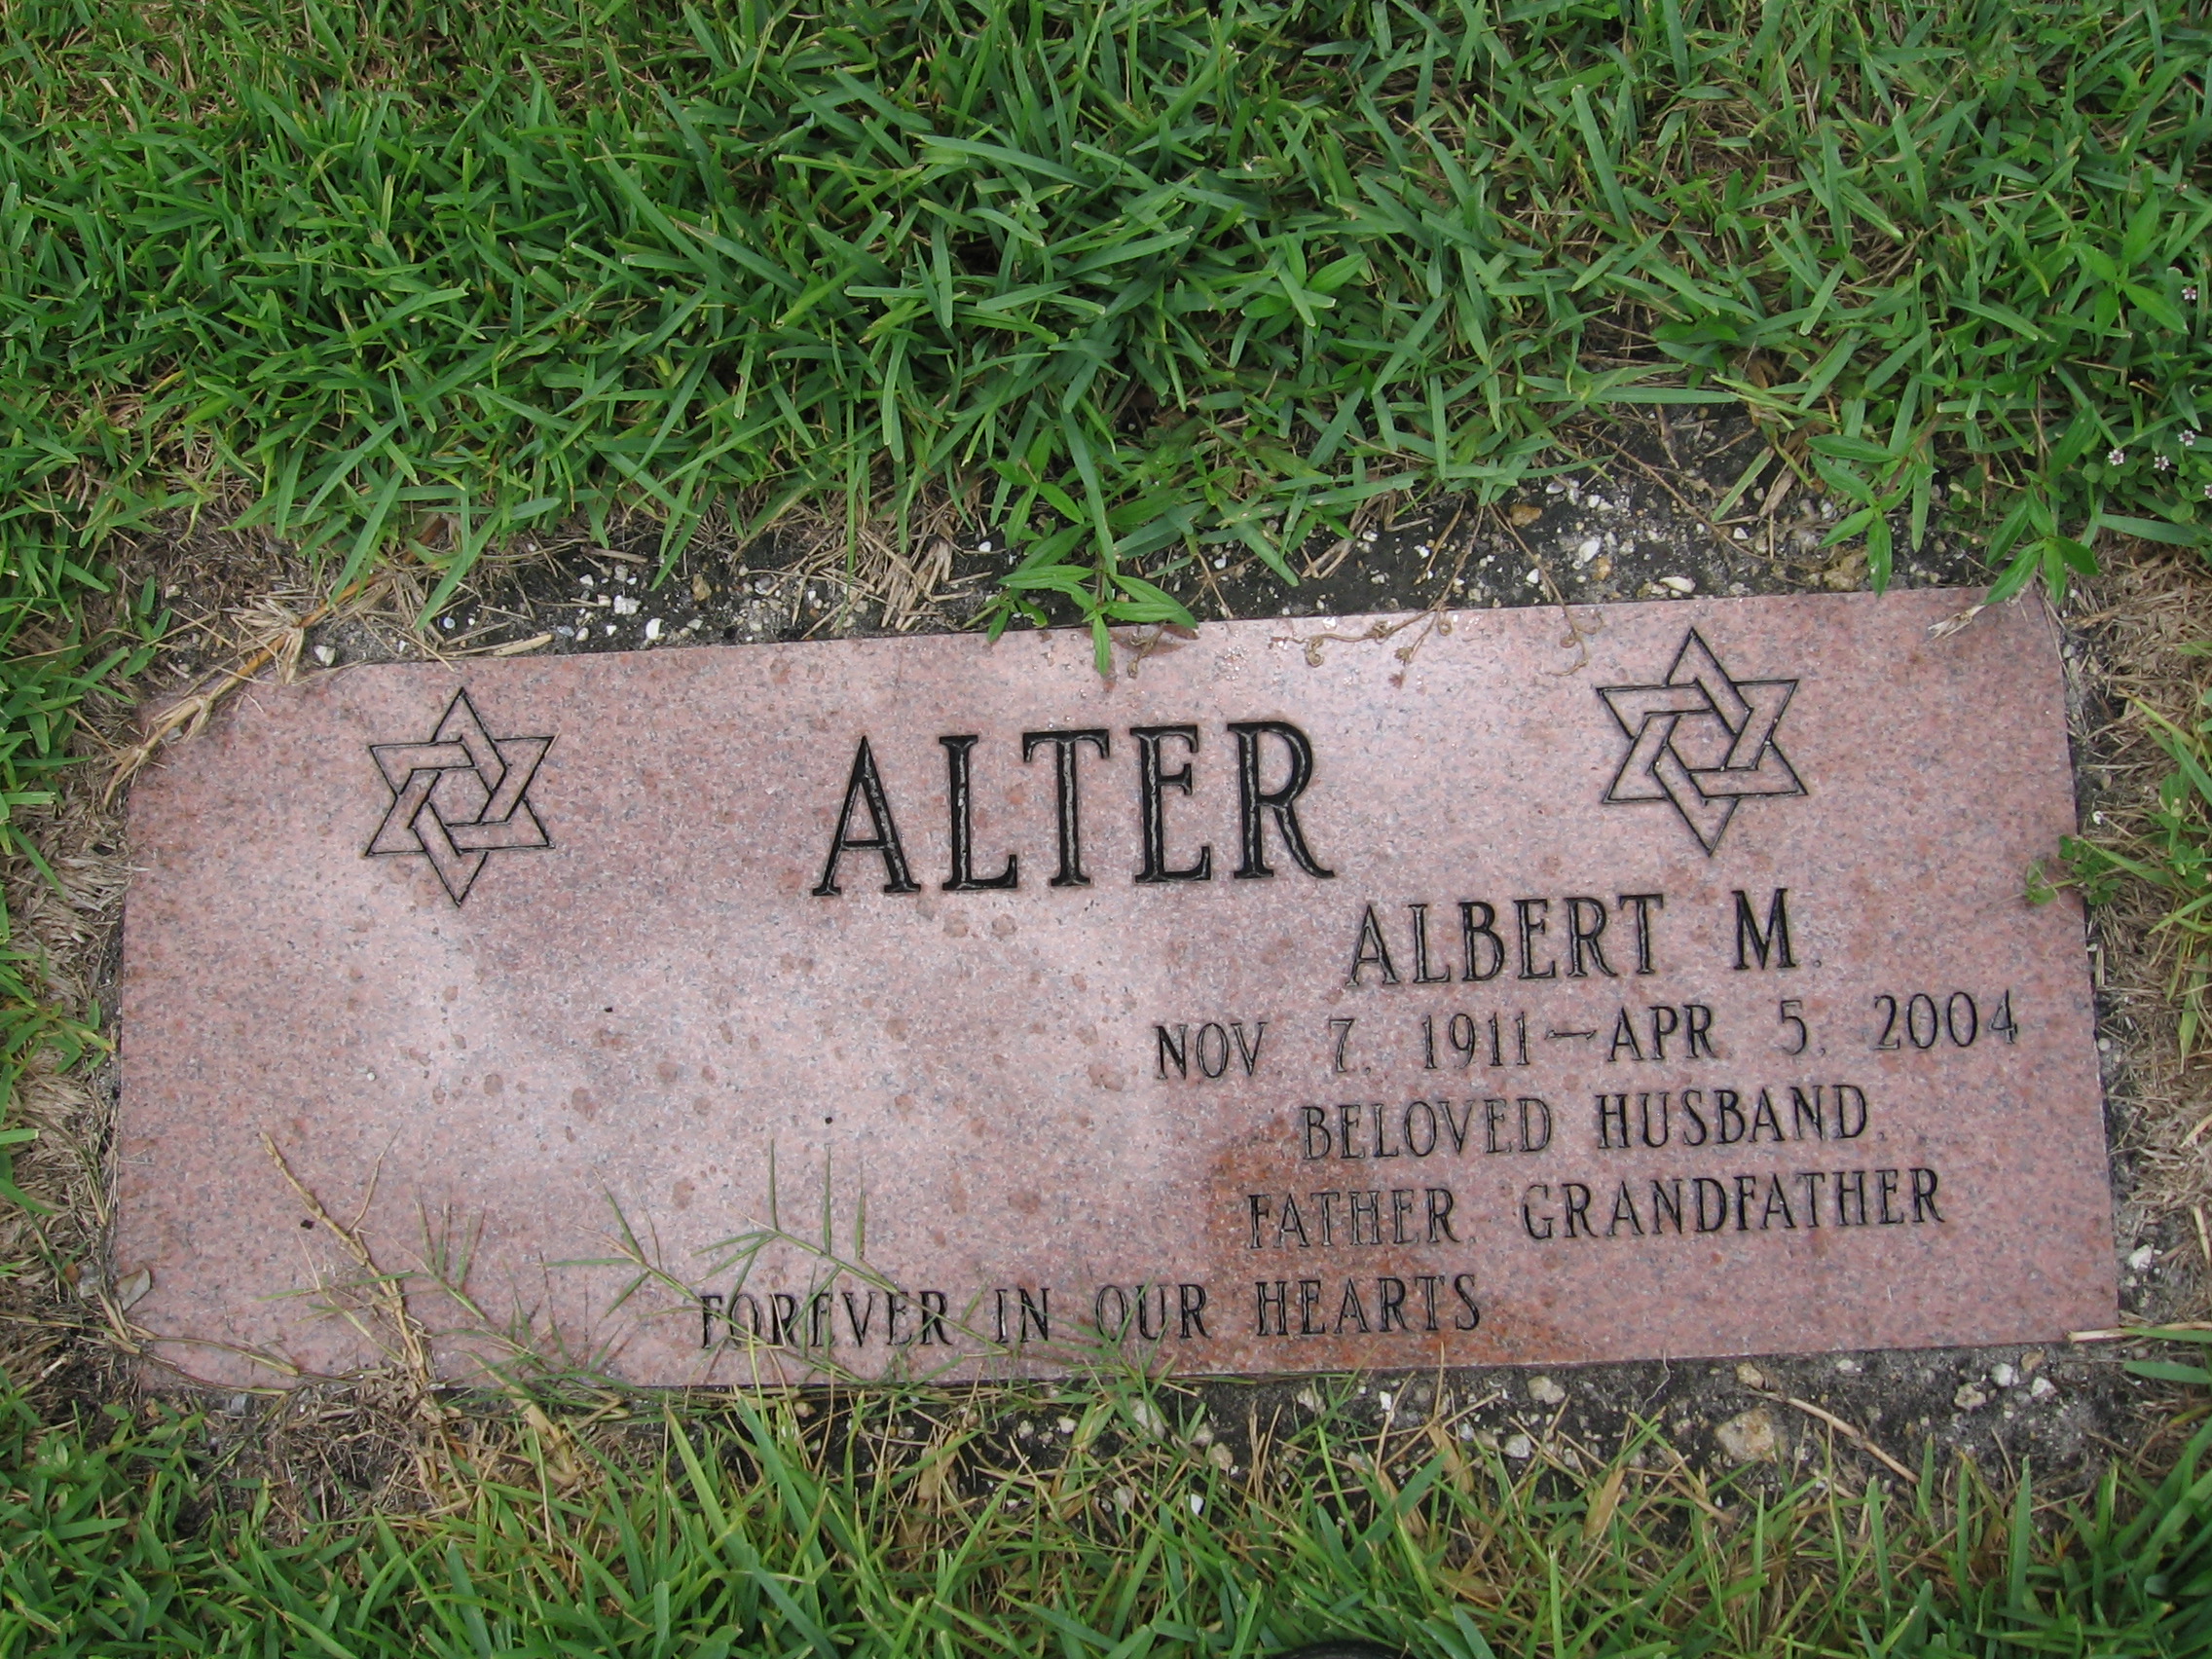 Albert M Alter